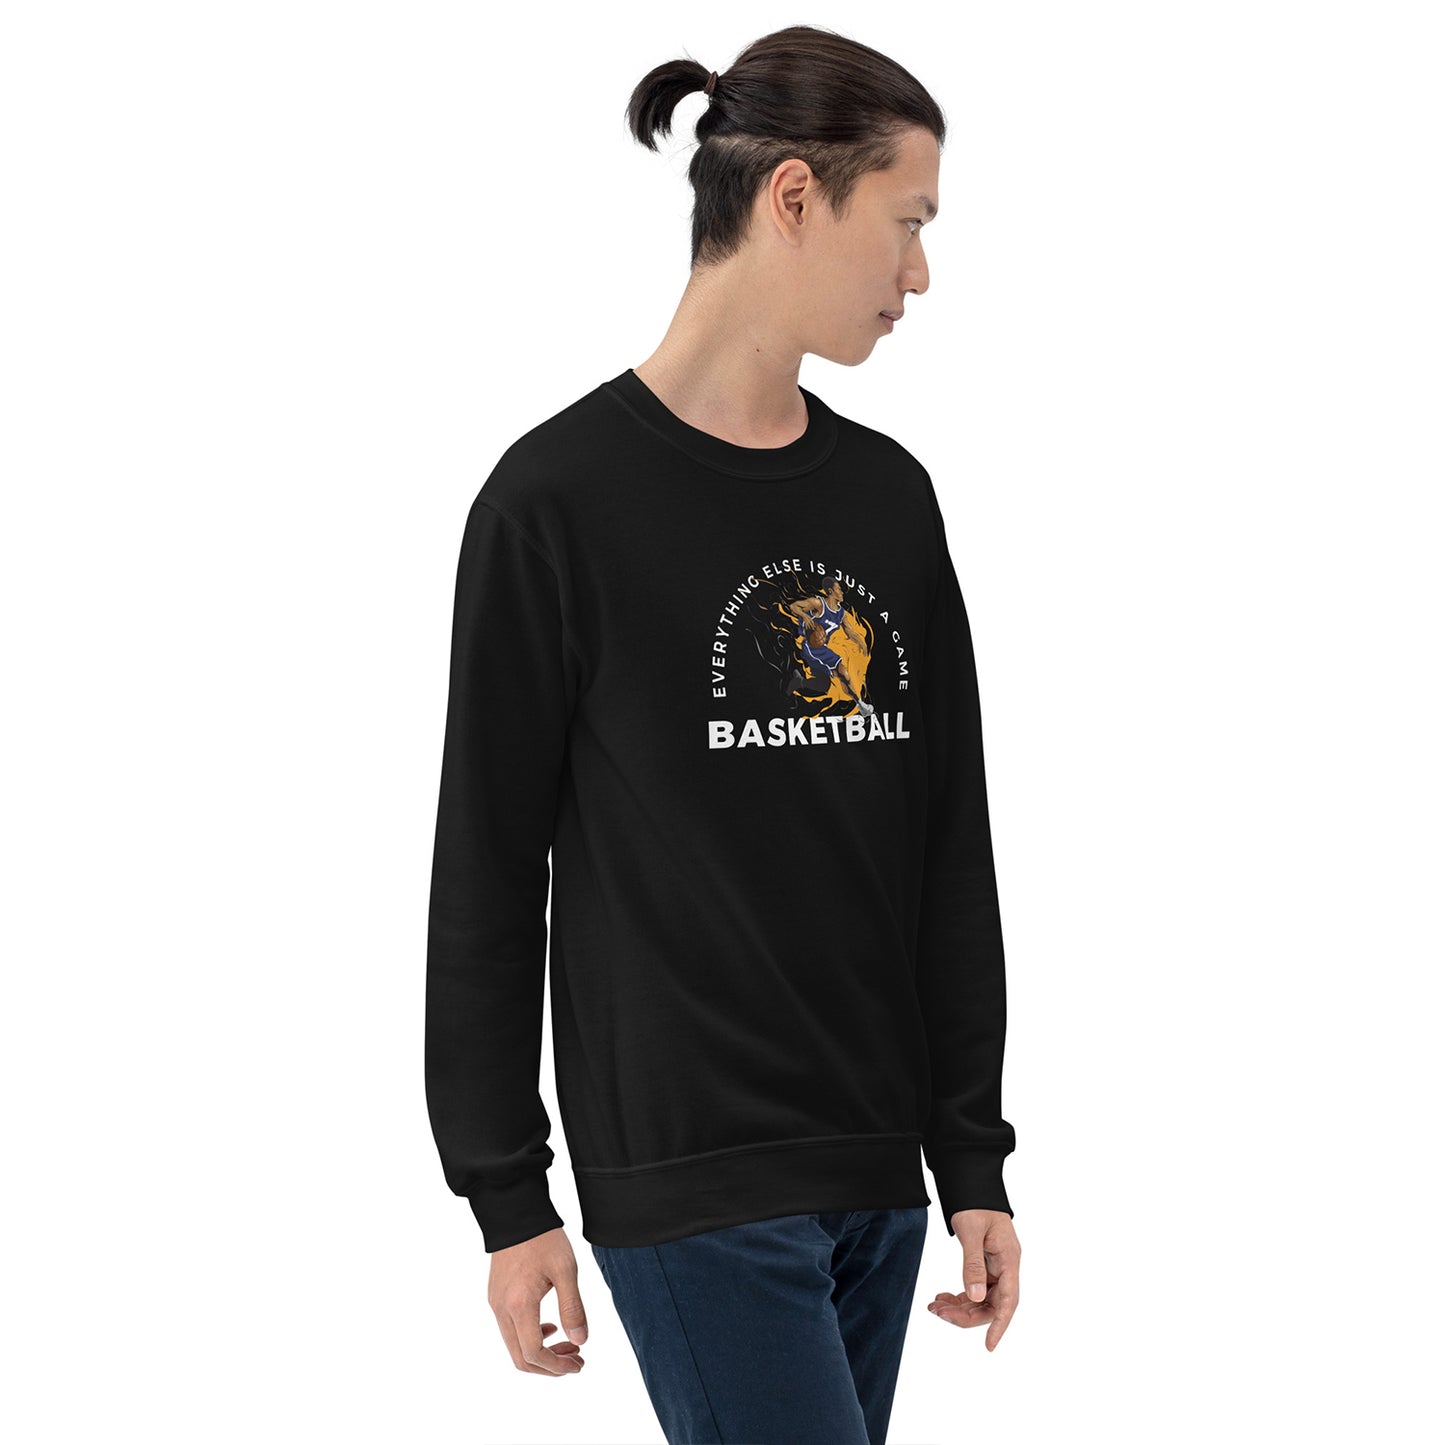 Men's Basketball Inspired Sweatshirt